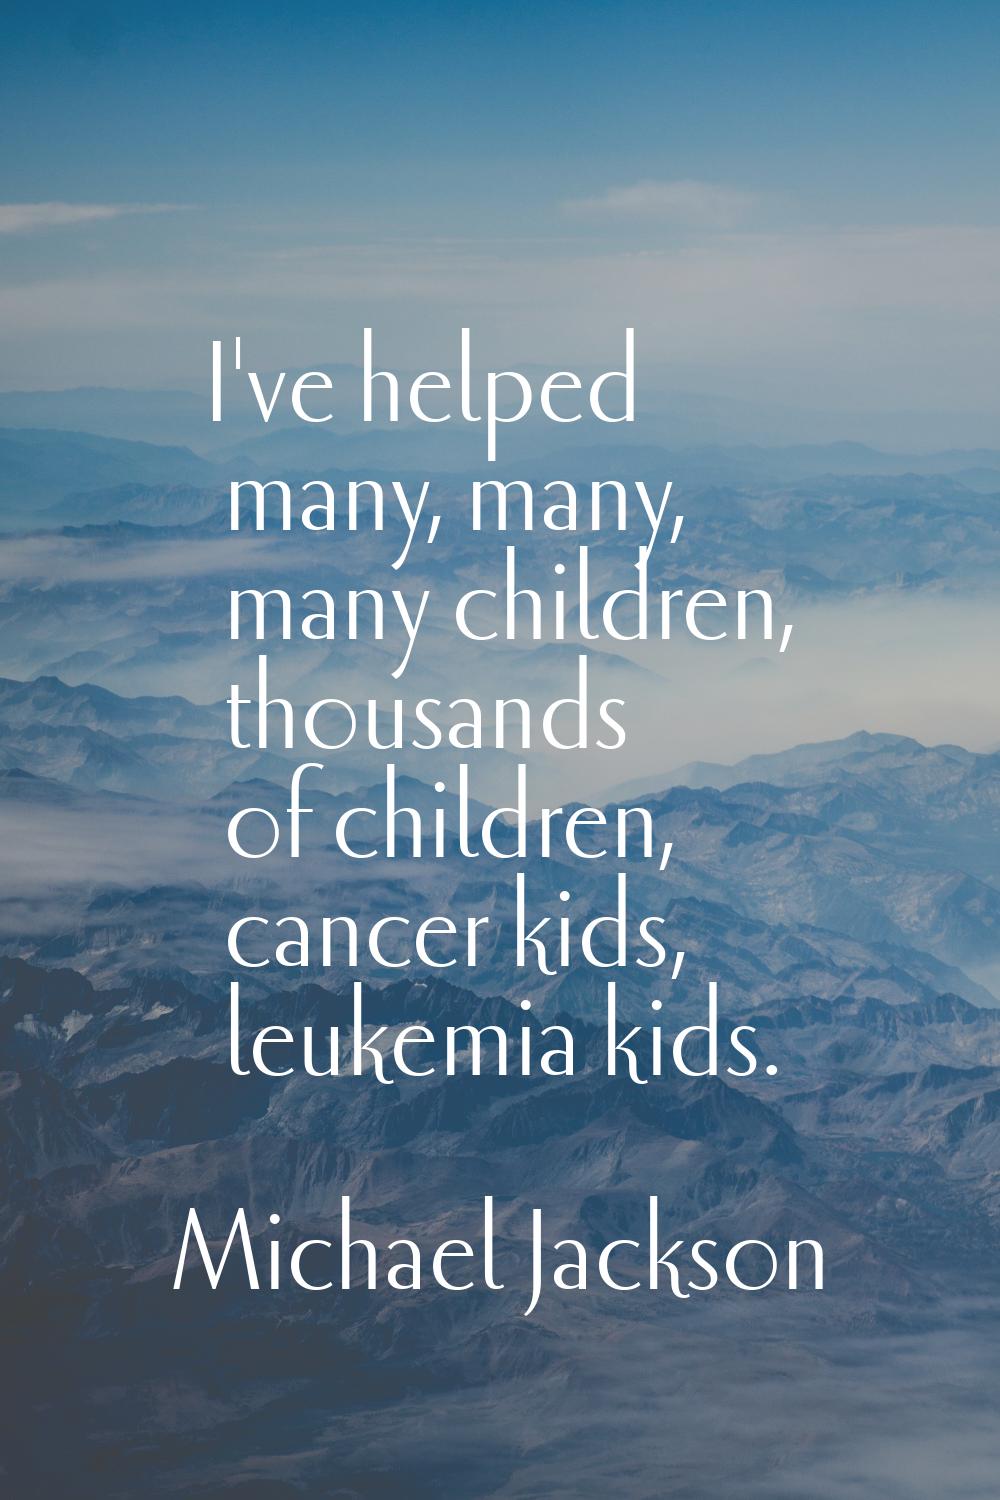 I've helped many, many, many children, thousands of children, cancer kids, leukemia kids.